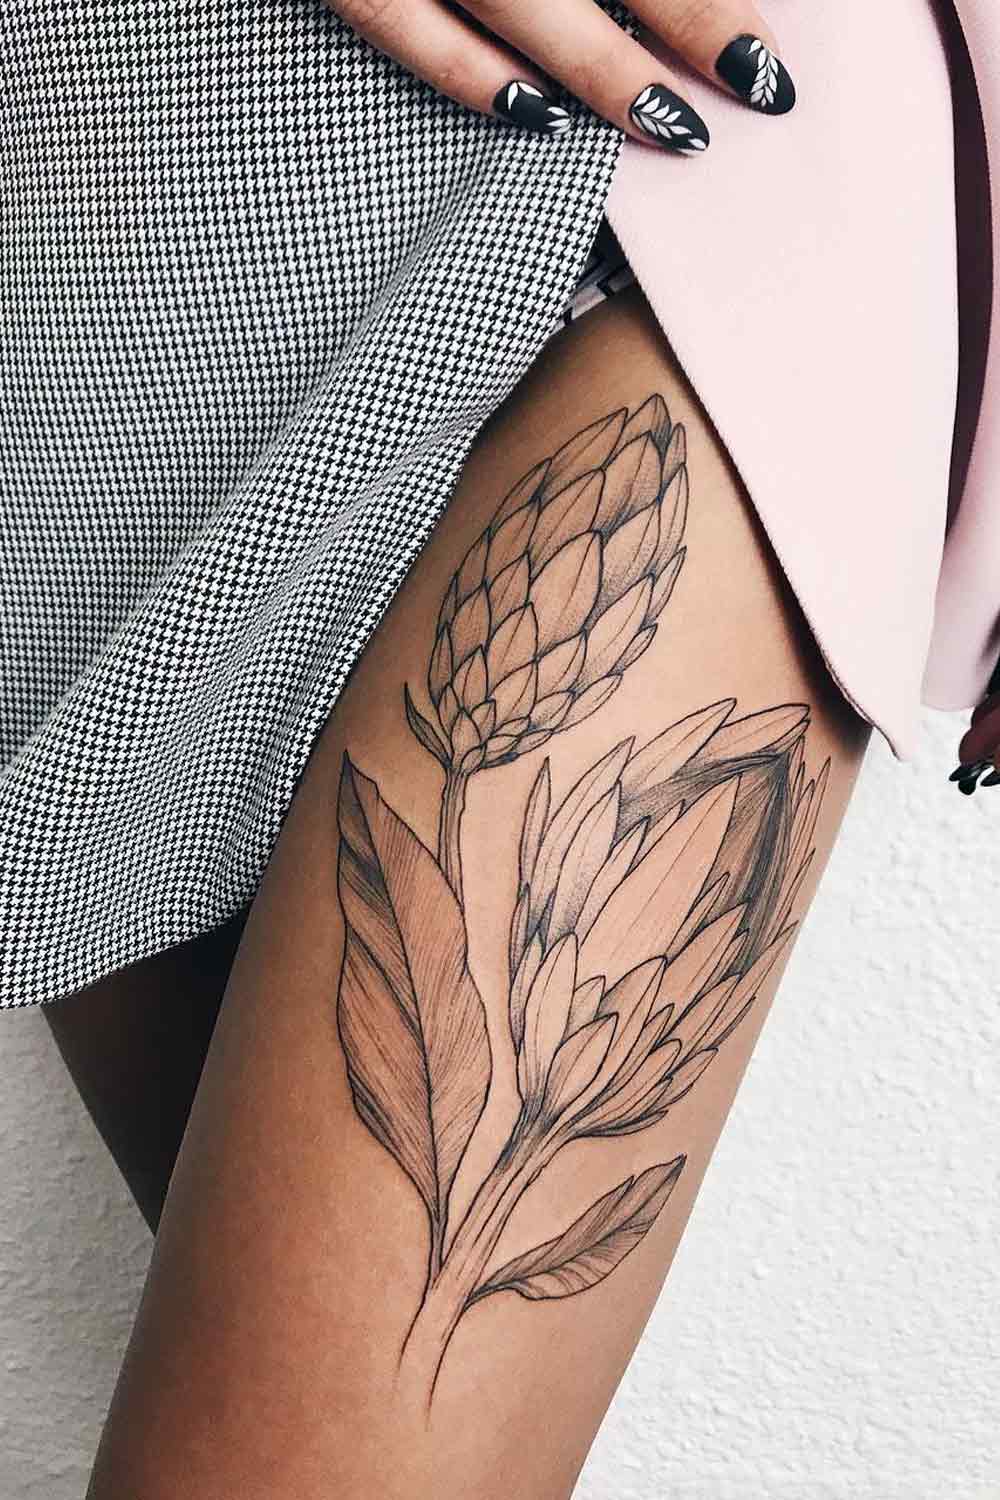 Tattoo on thigh